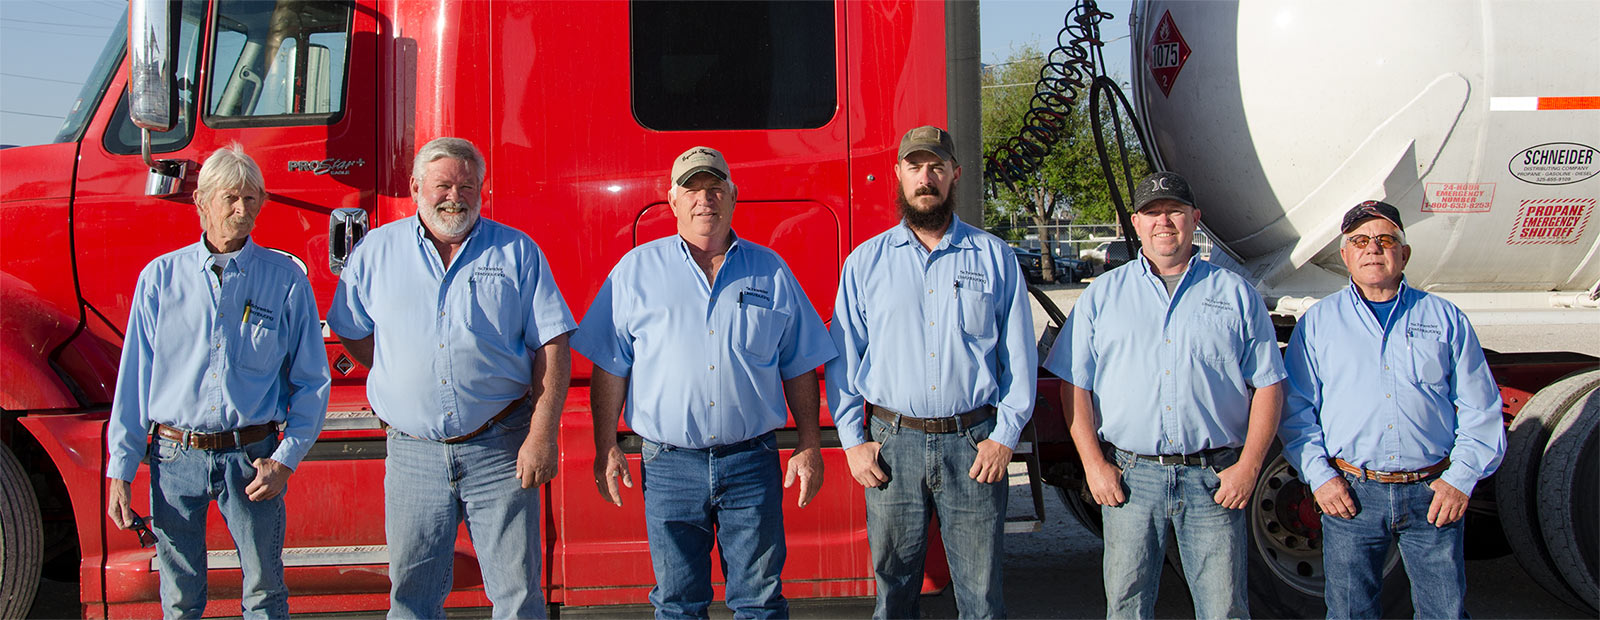 Schneider Distributing Company Inc. - Professional Fuel Distribution Team